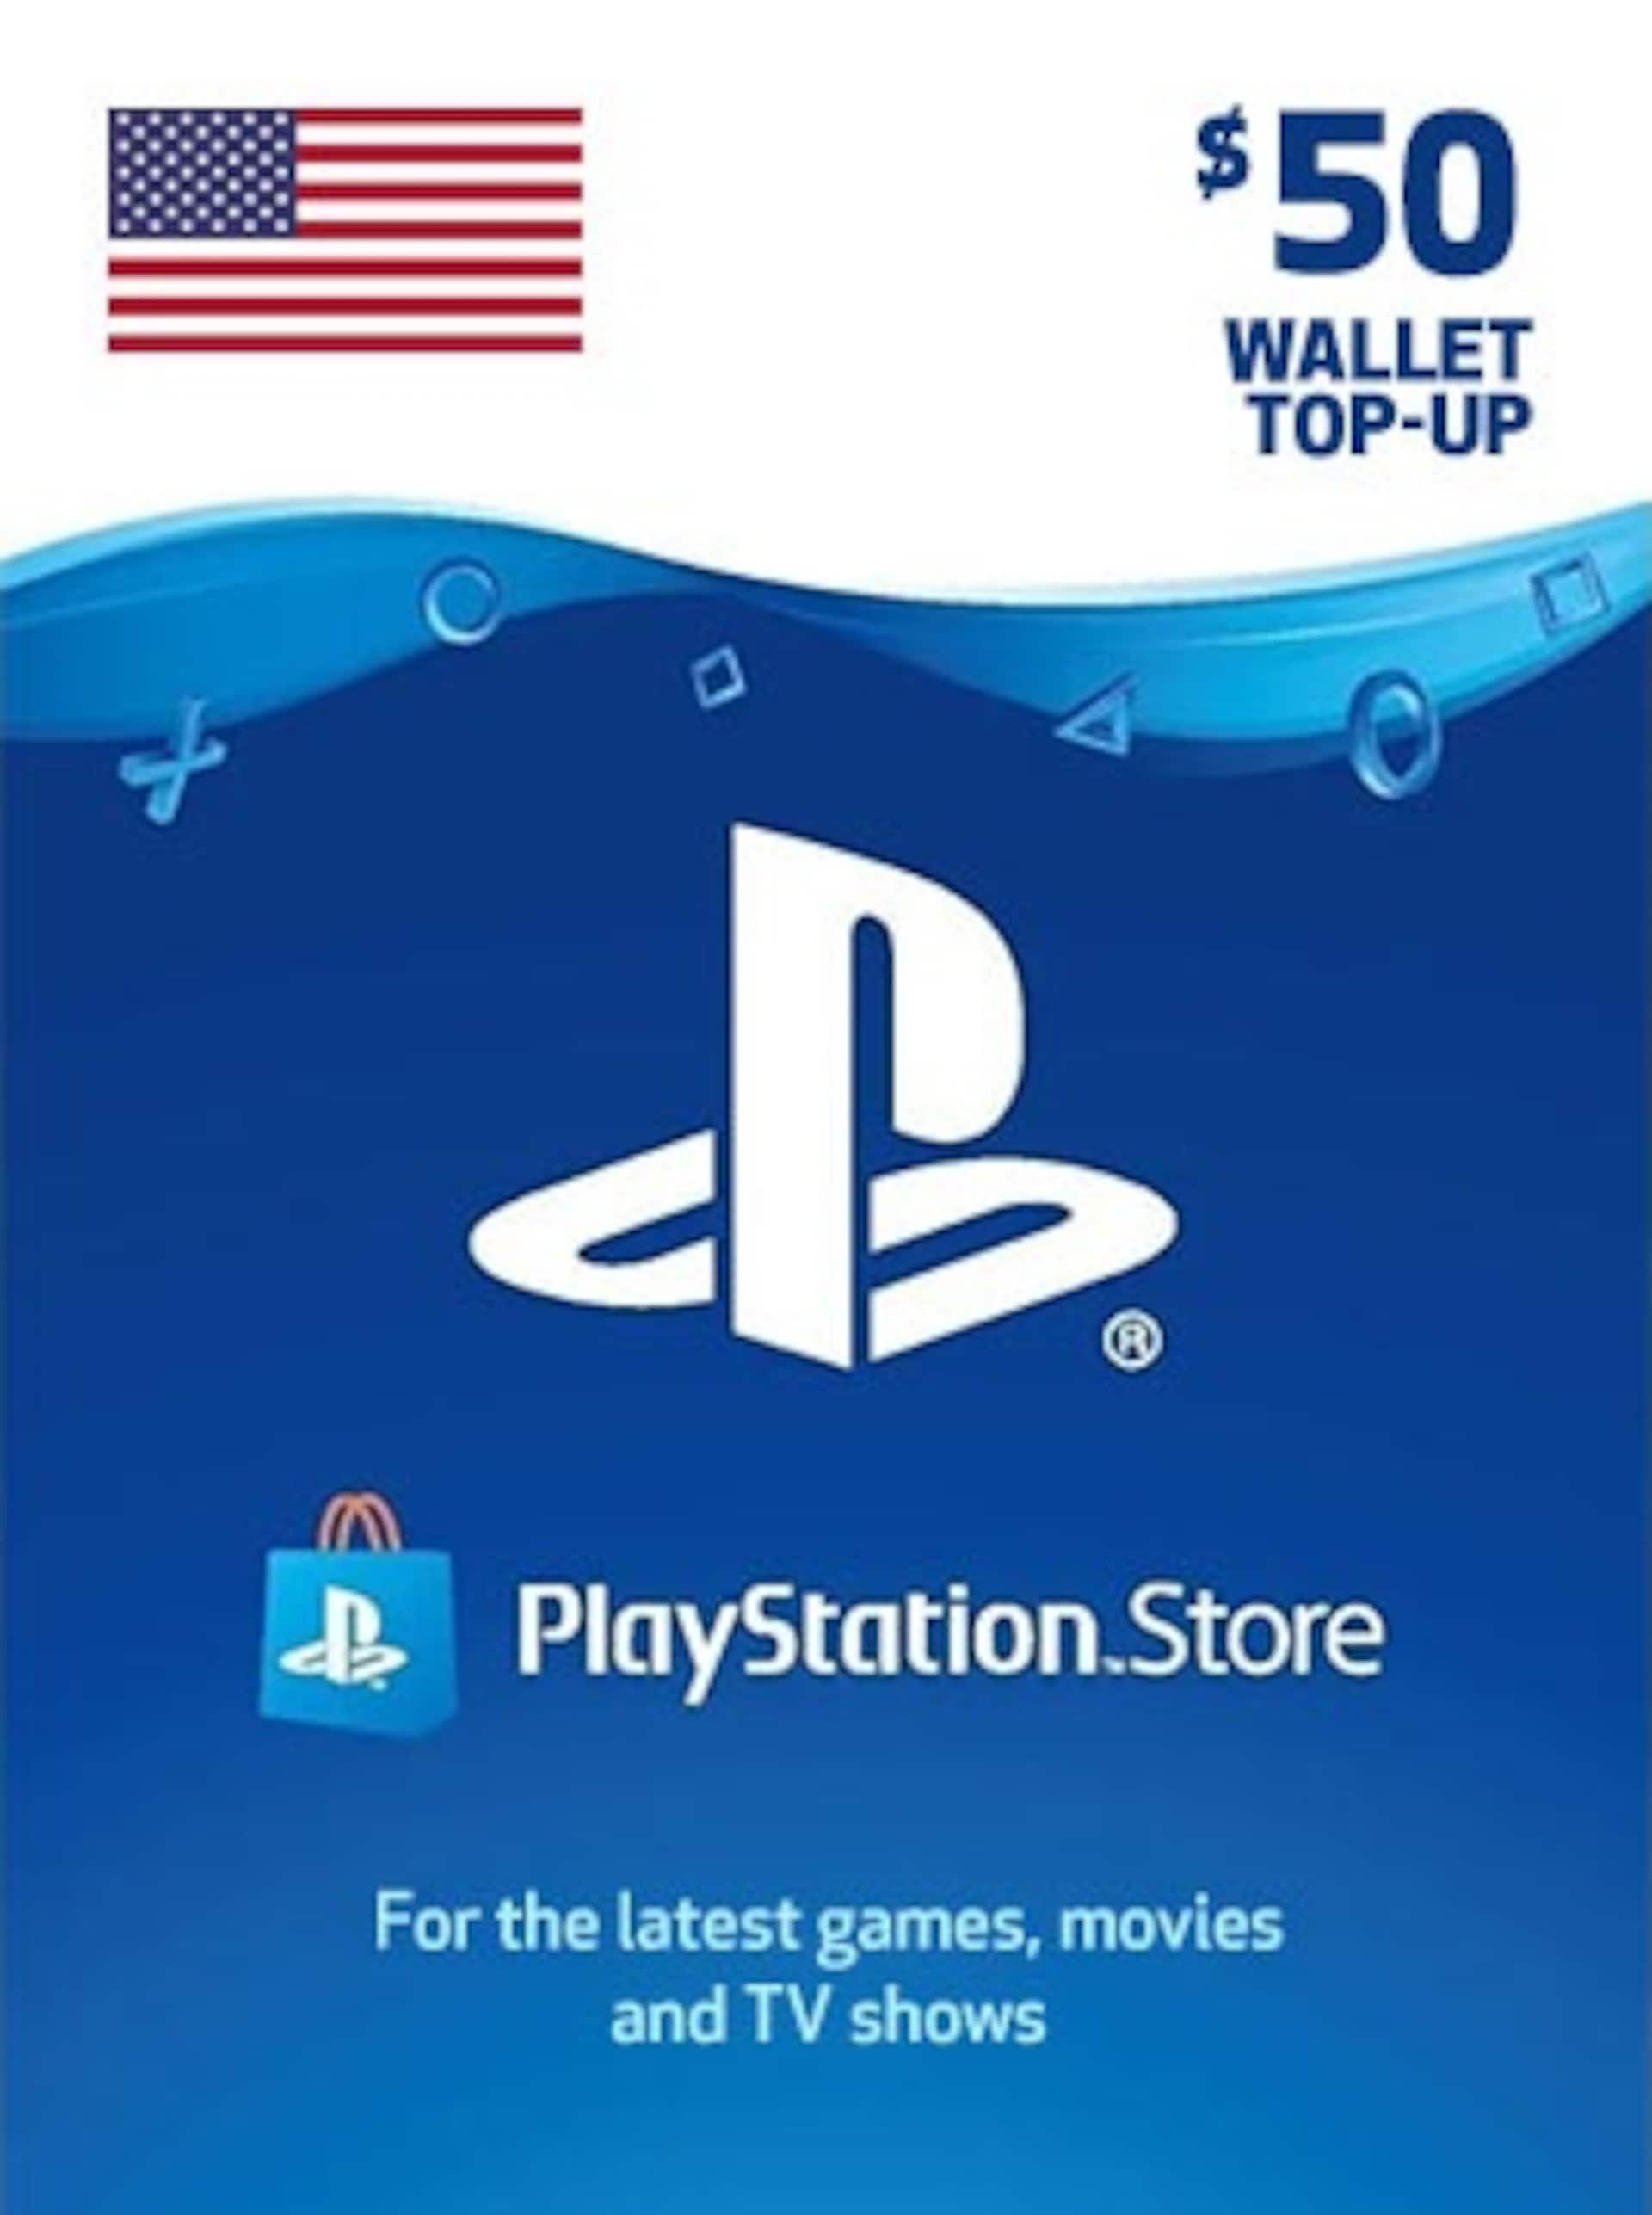 Verleden zonnebloem Kijkgat Buy 10 USD PSN Gift Card (US) - PlayStation Network